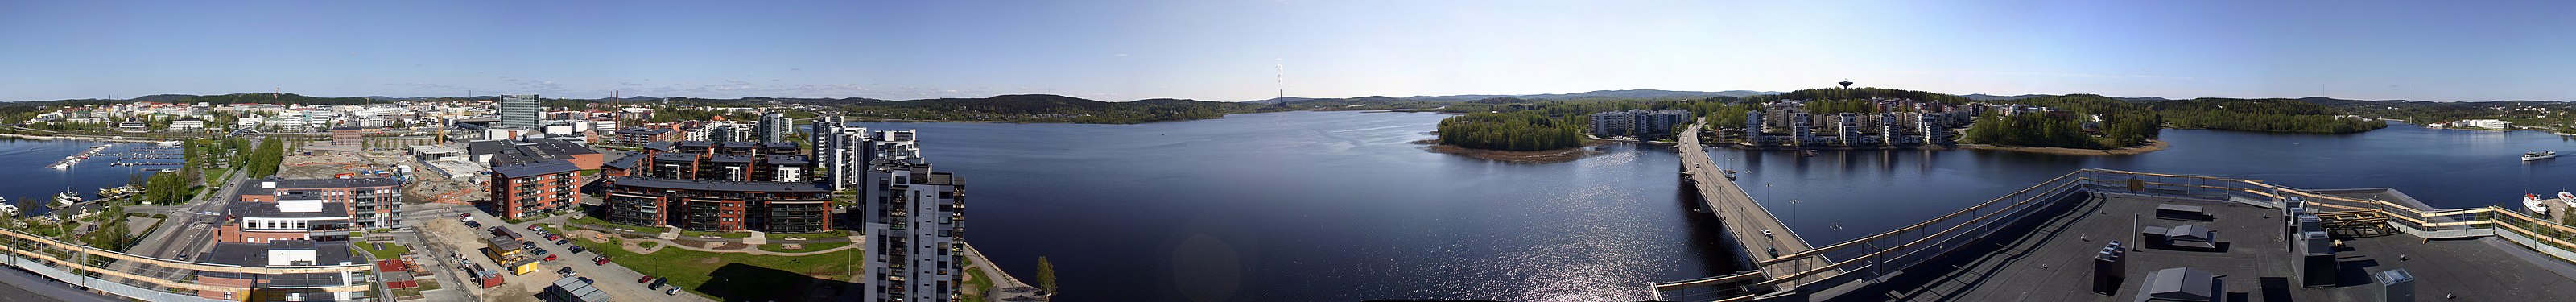 View of Jyväskylä